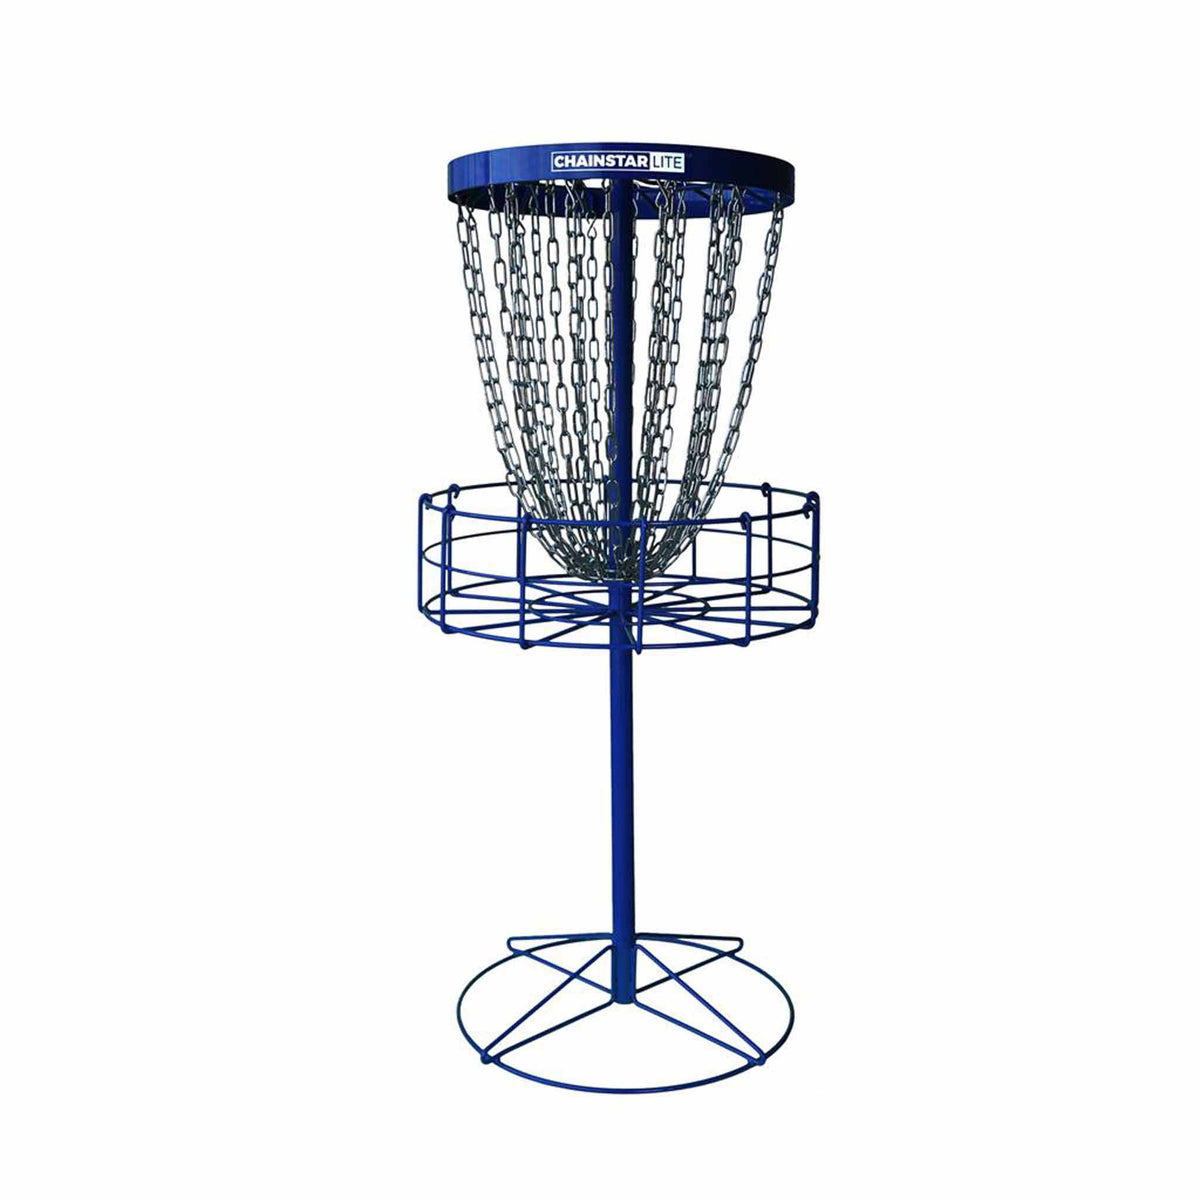 Discraft Chainstar Lite Basket Portable Disc Golf Target - Blue